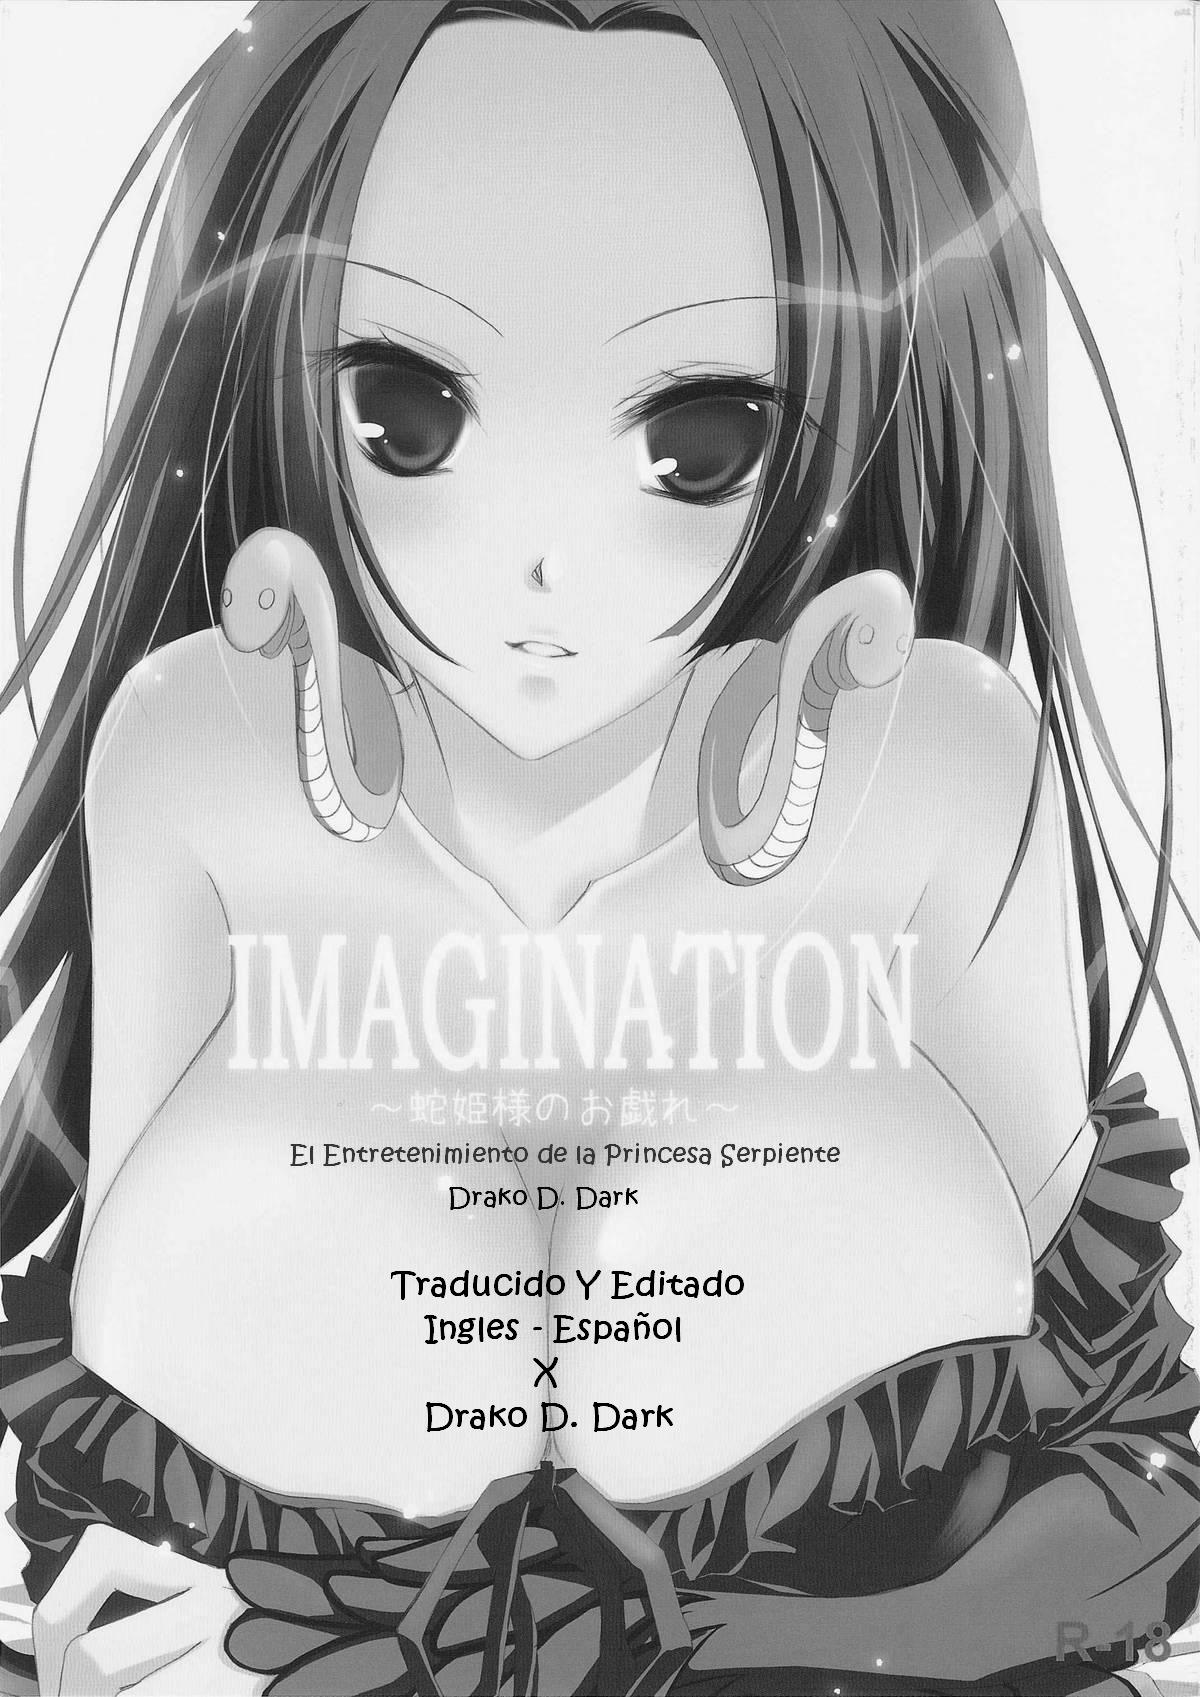 [Spanish] Imagination - One Piece [Drako D. Dark] 